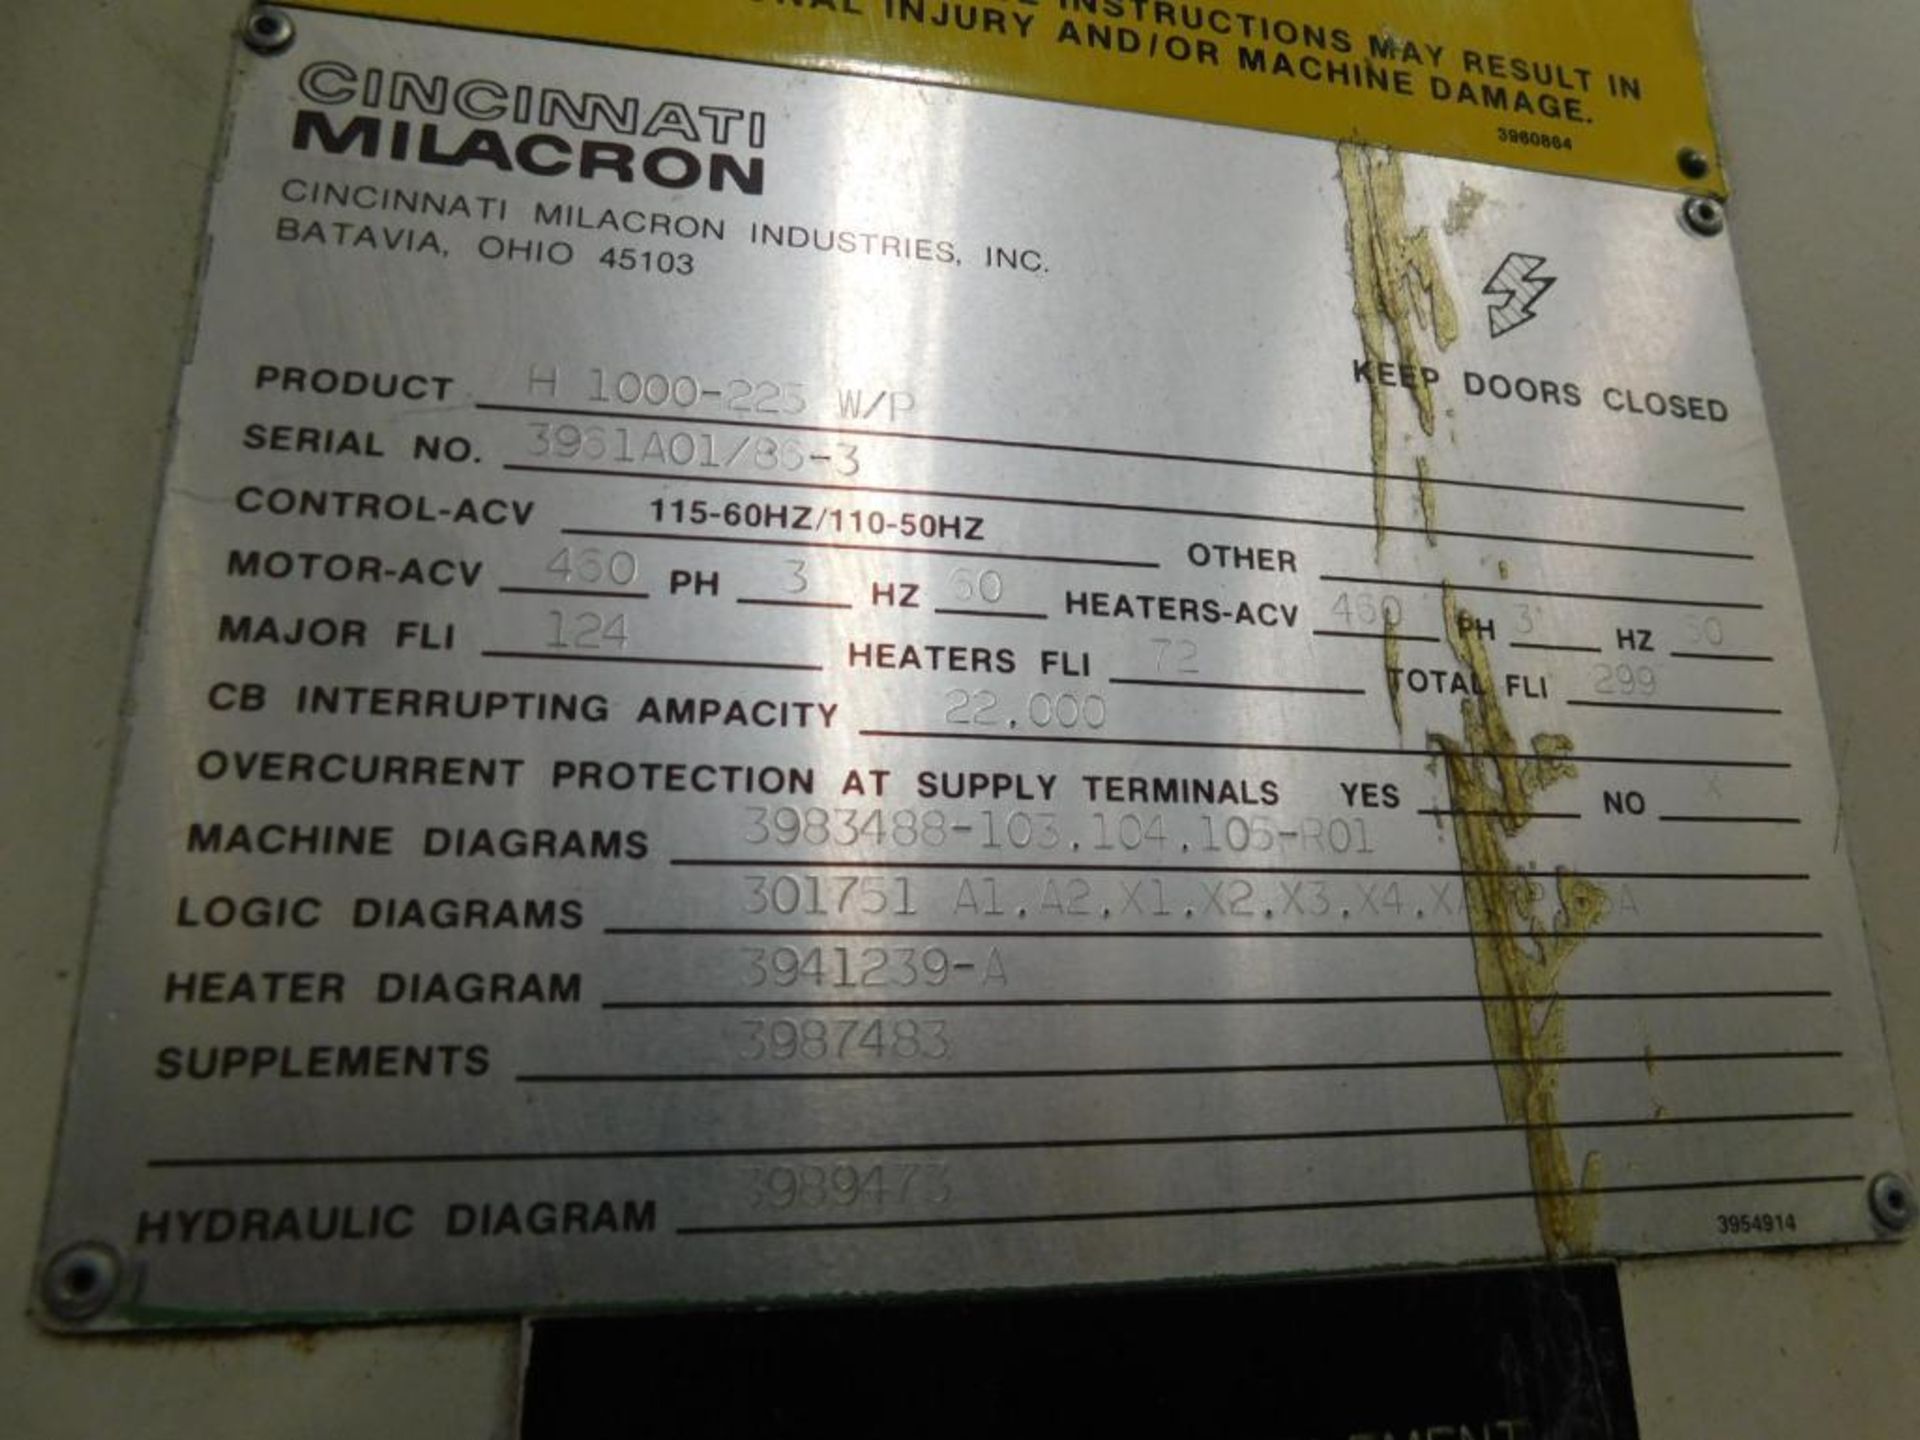 Cincinnati Milacron H1000-225 W/P 1000-Ton Horizontal Injection Molding Machine, S/N 3961A01/83-3 (A - Image 14 of 14